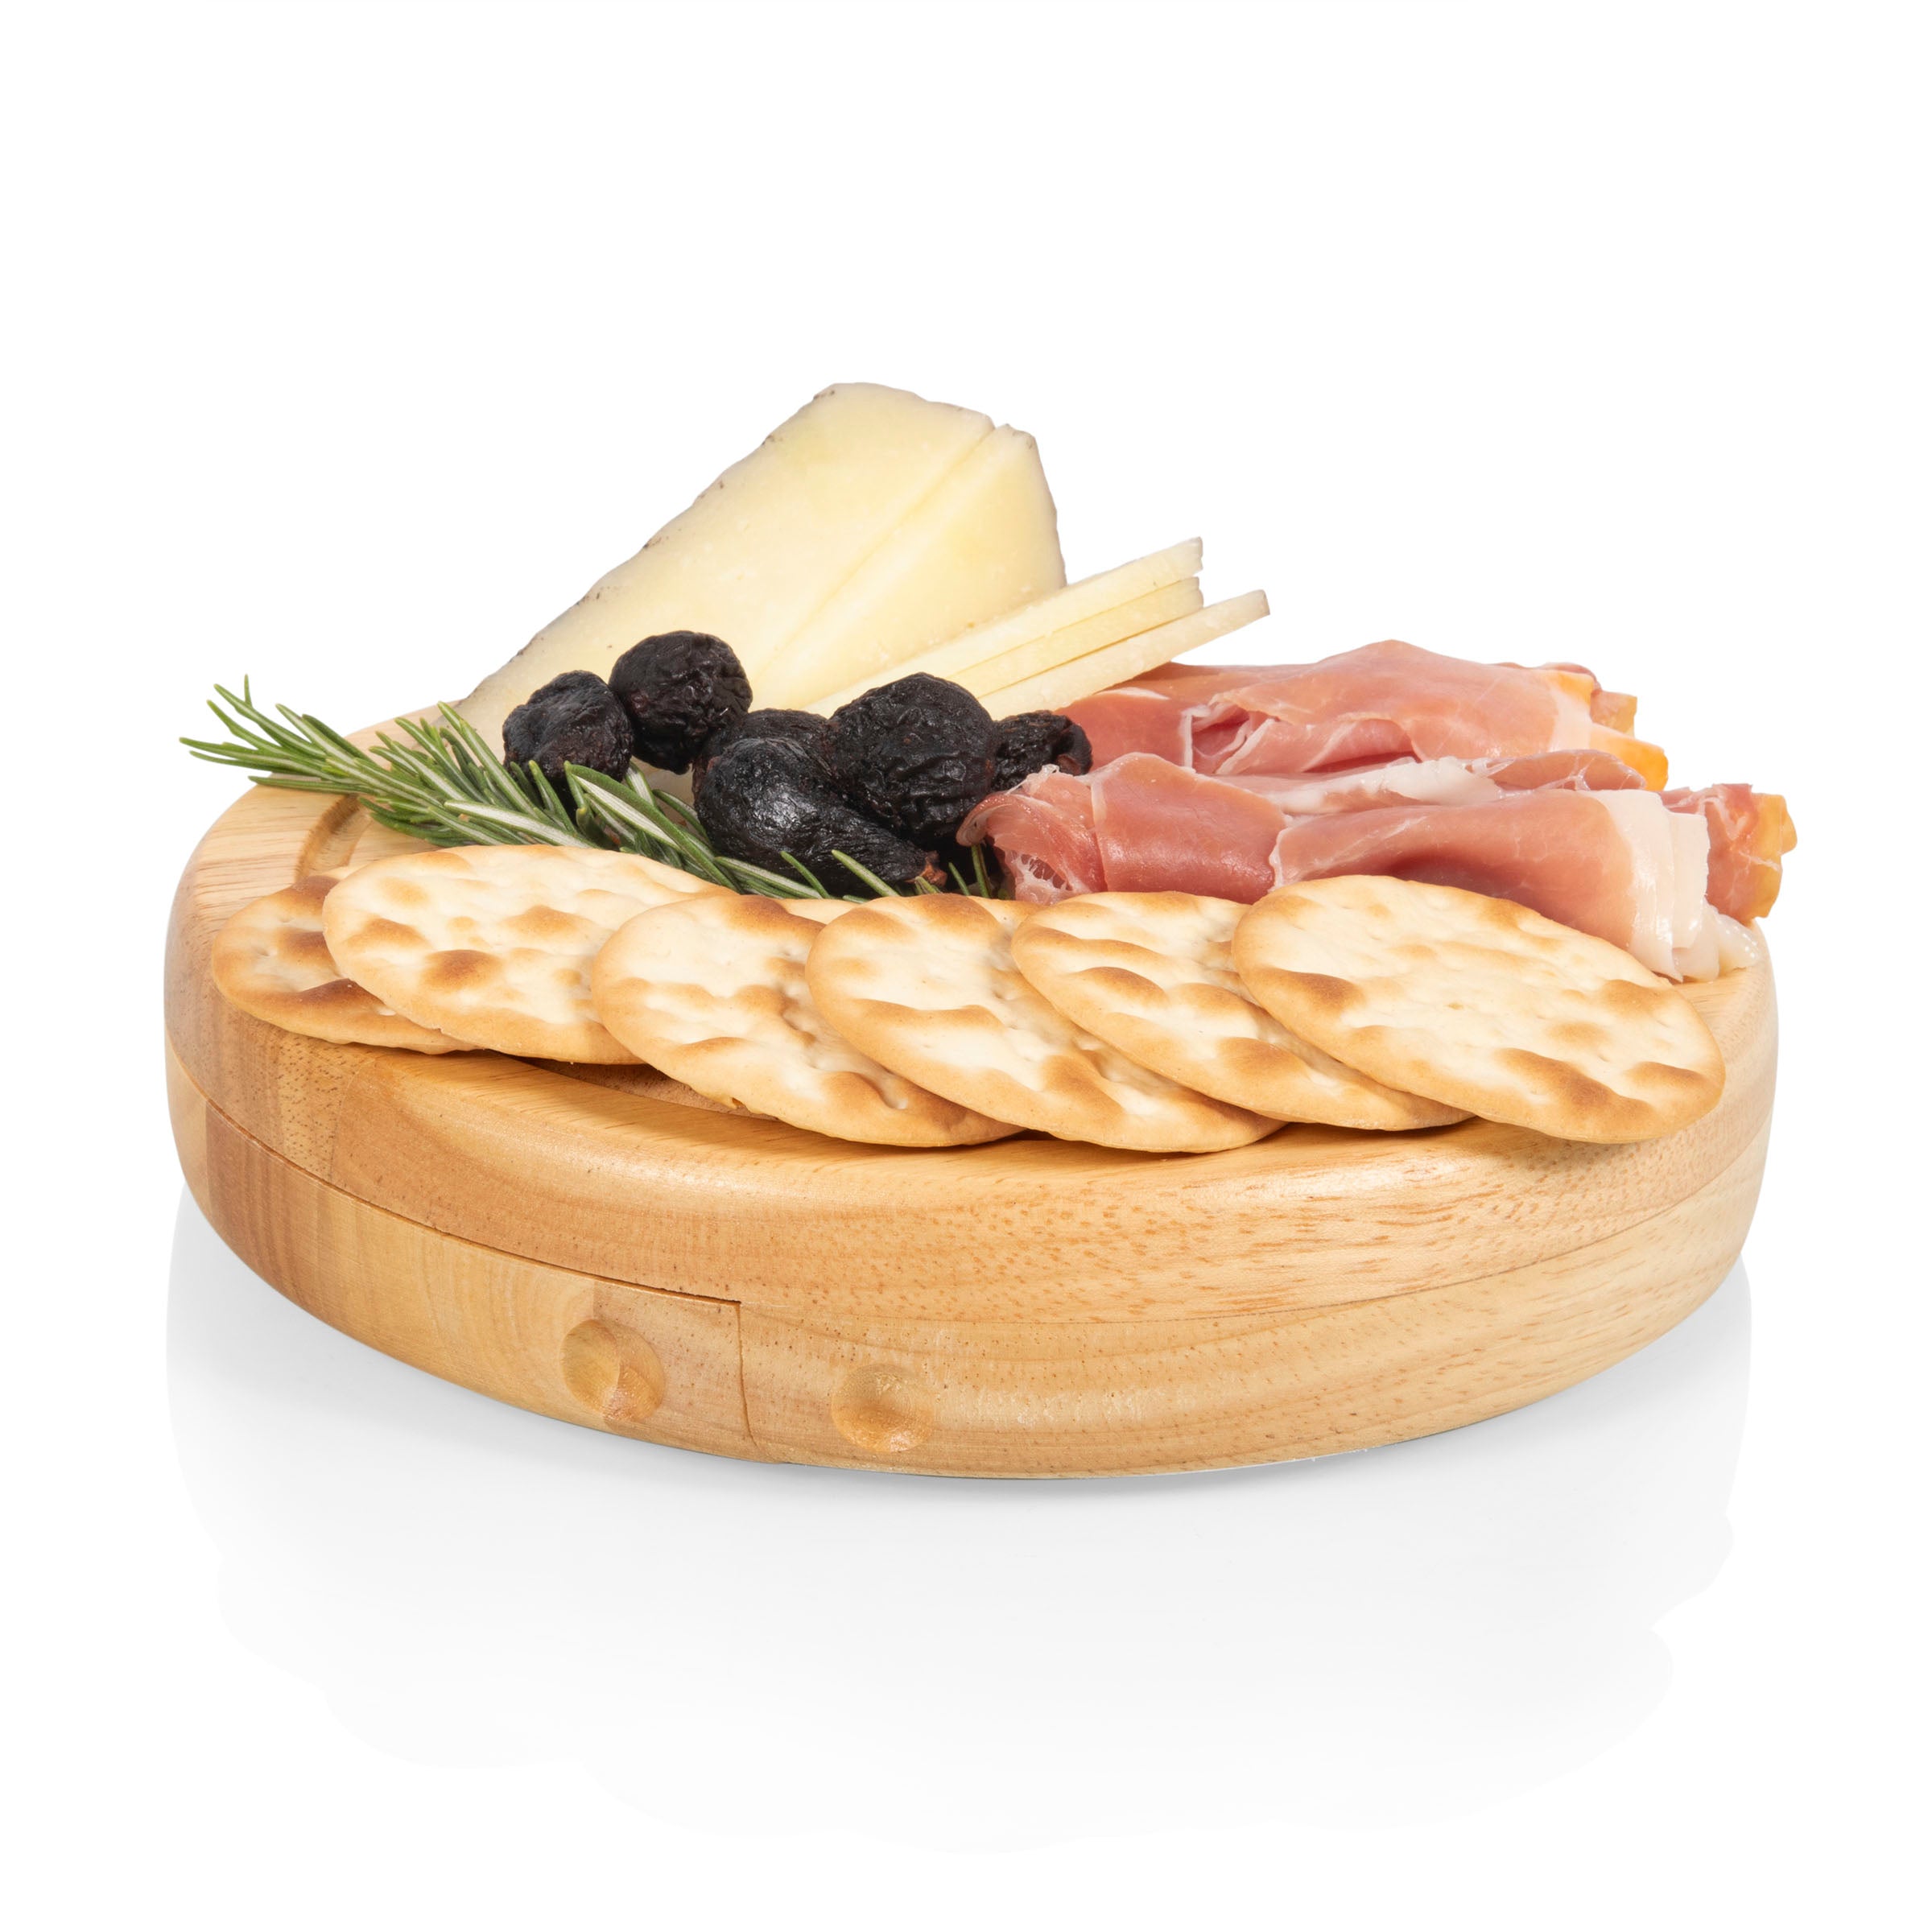 Cal Bears - Brie Cheese Cutting Board & Tools Set